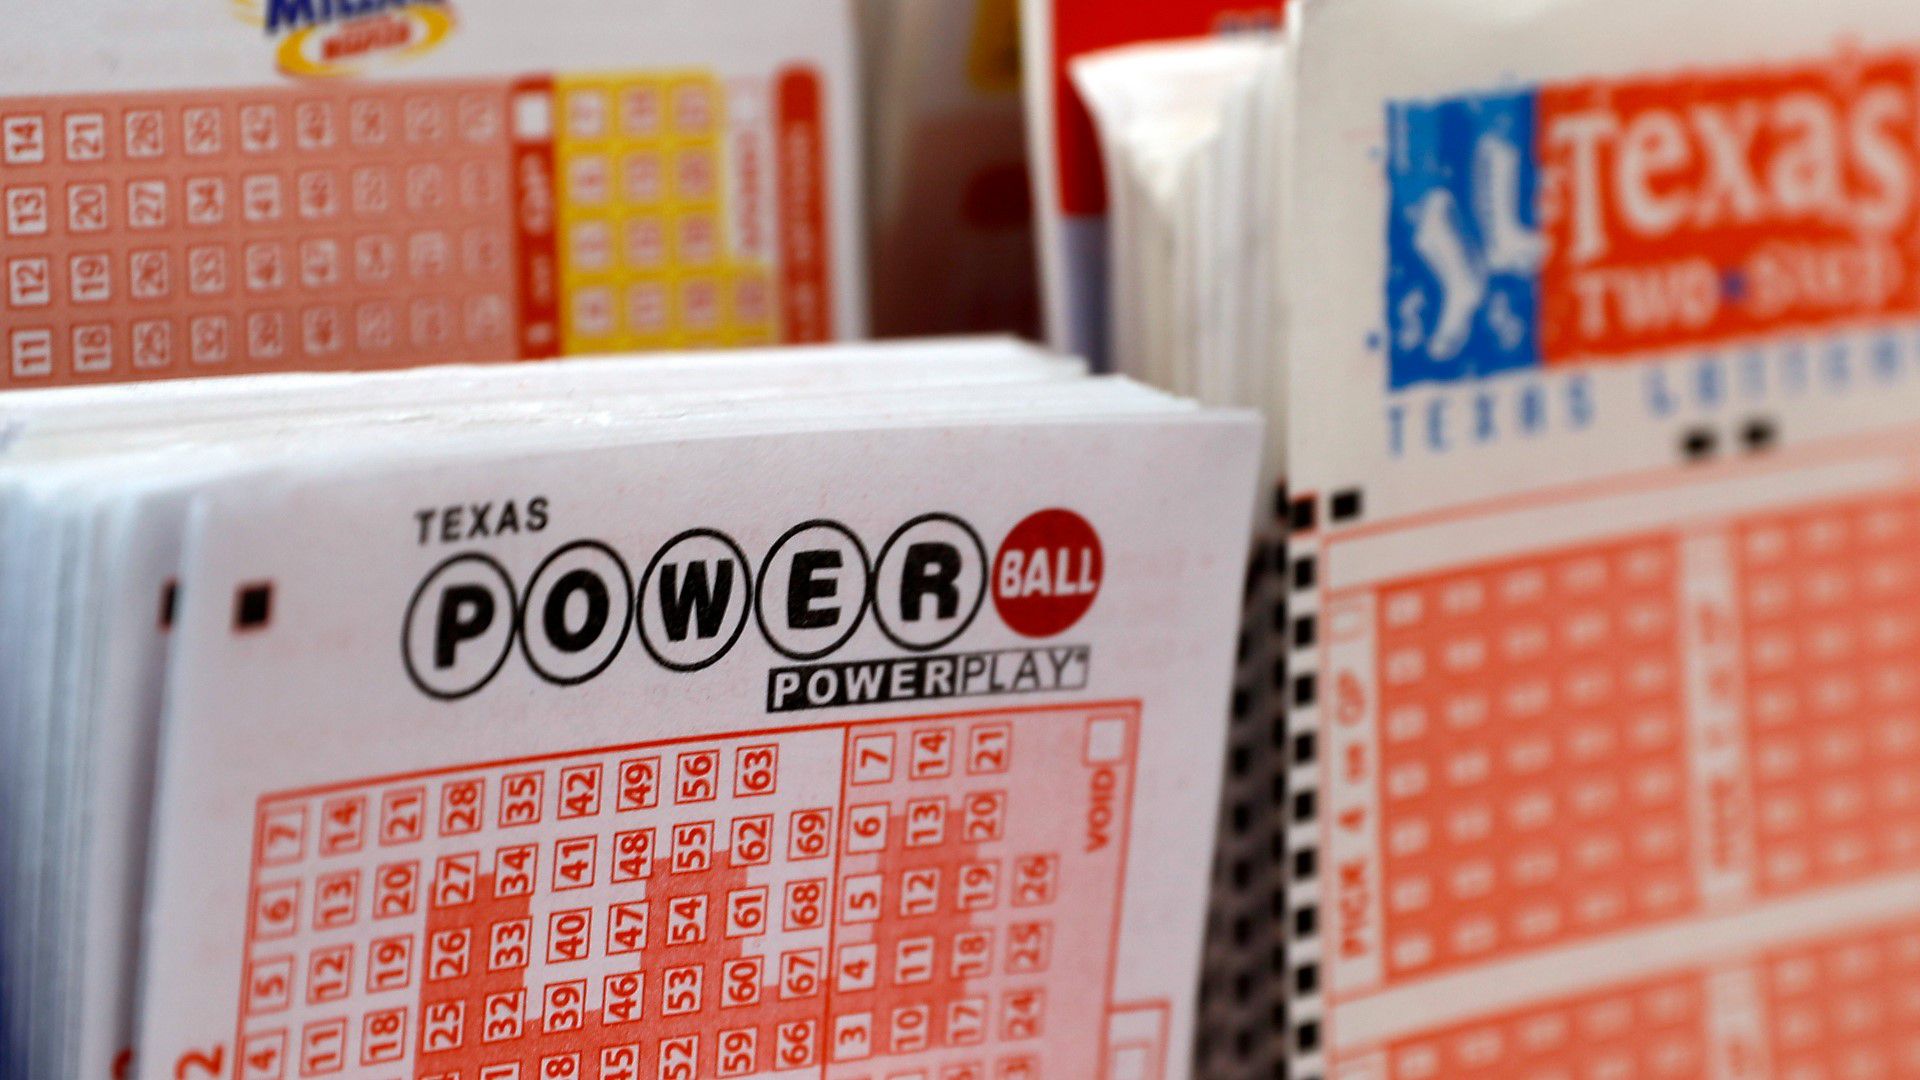 “No Winners of $922 Million Powerball Jackpot, Prize Reaches $1 Billion!”